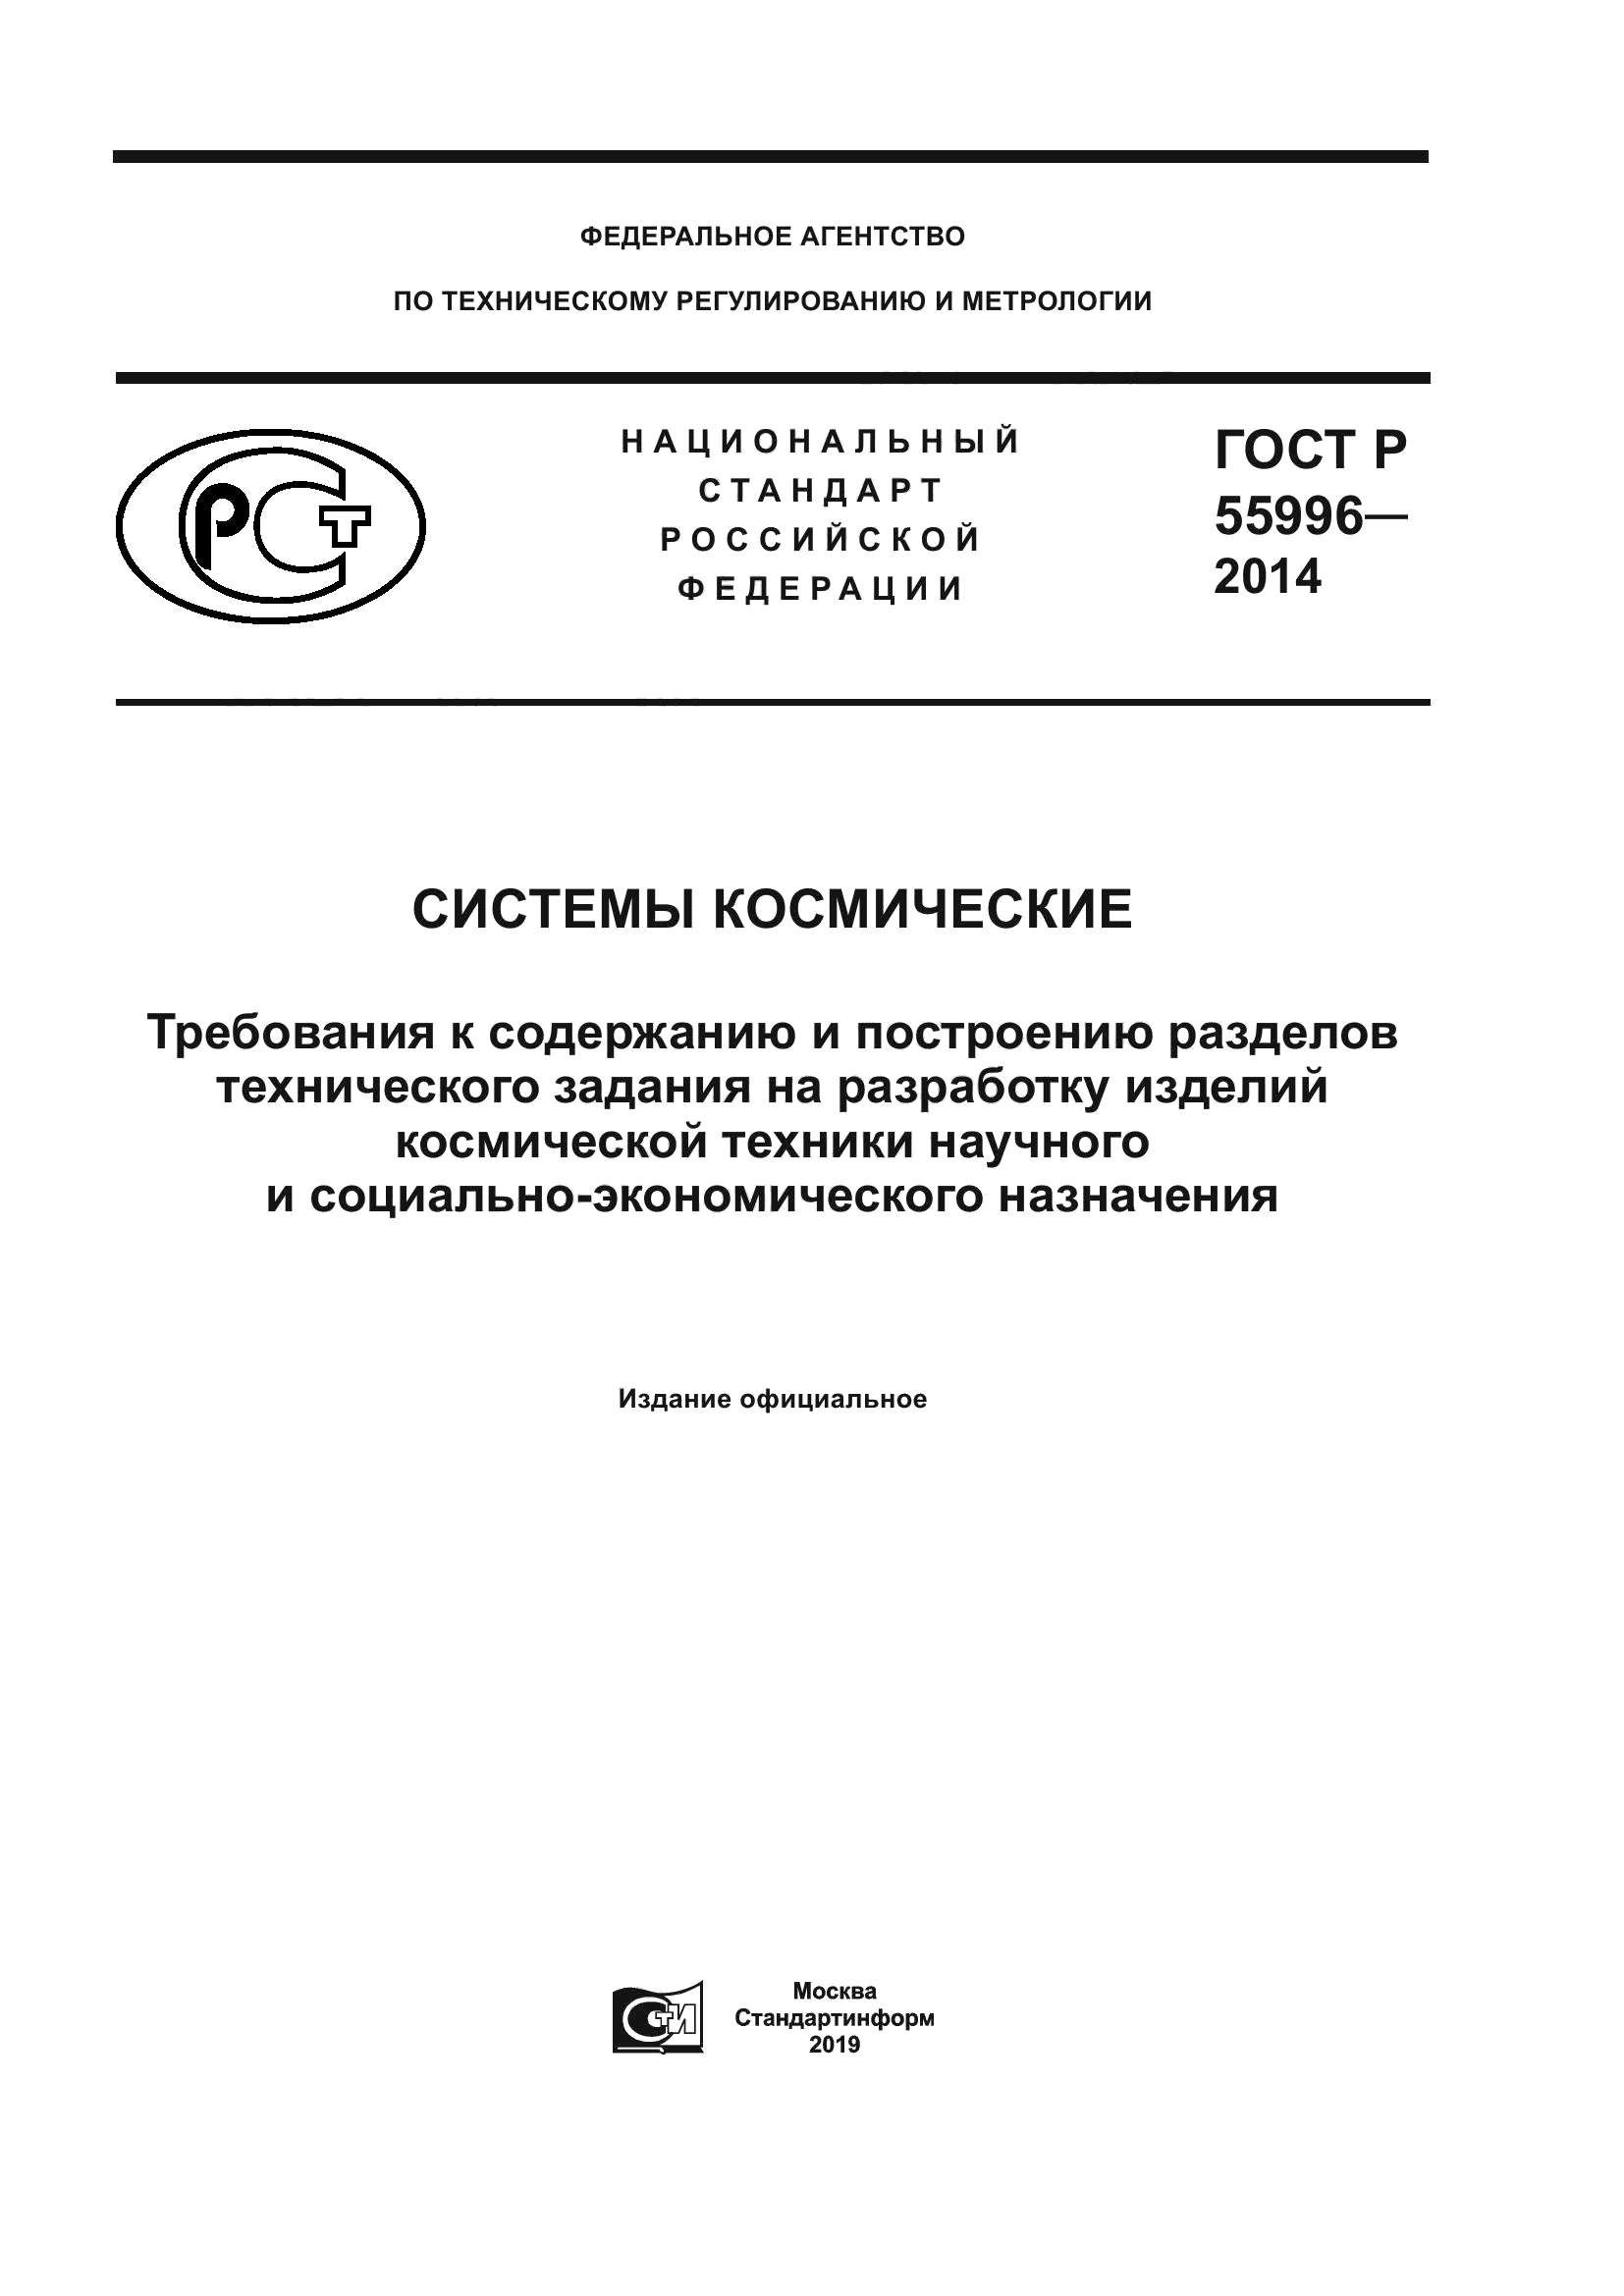 ГОСТ Р 55996-2014